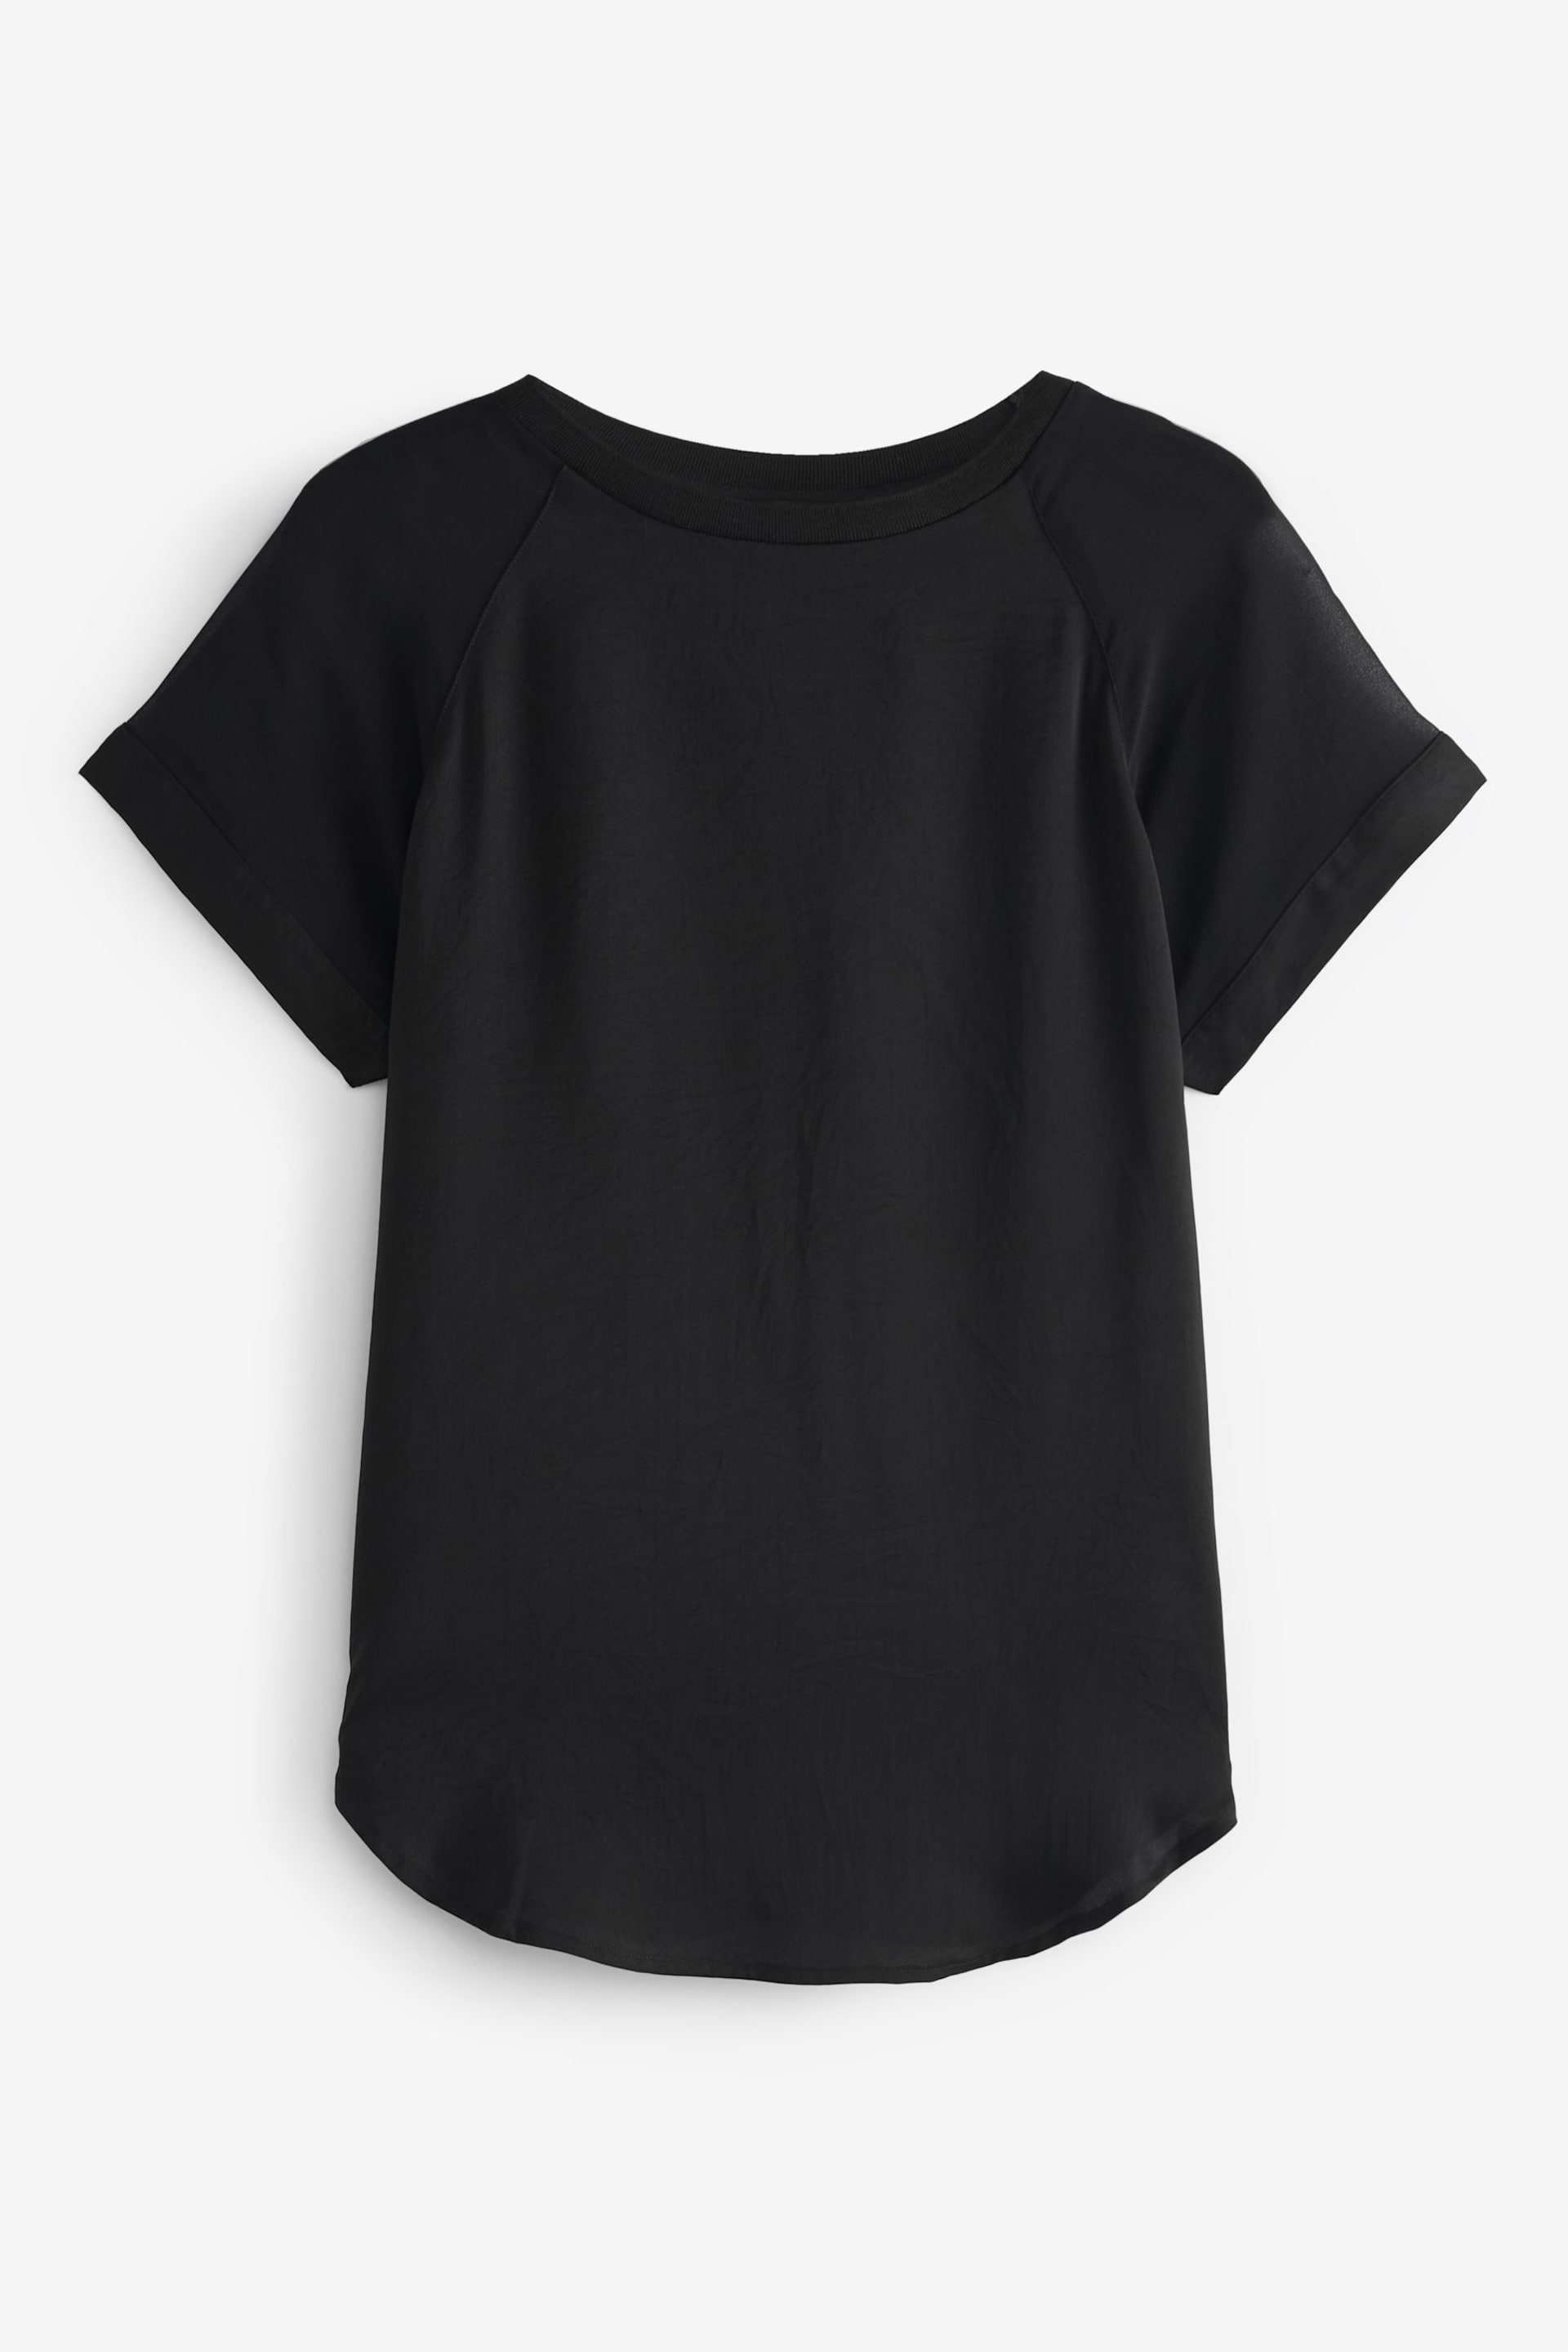 Black Woven Mix Short Sleeve Raglan T-Shirt - Image 6 of 6